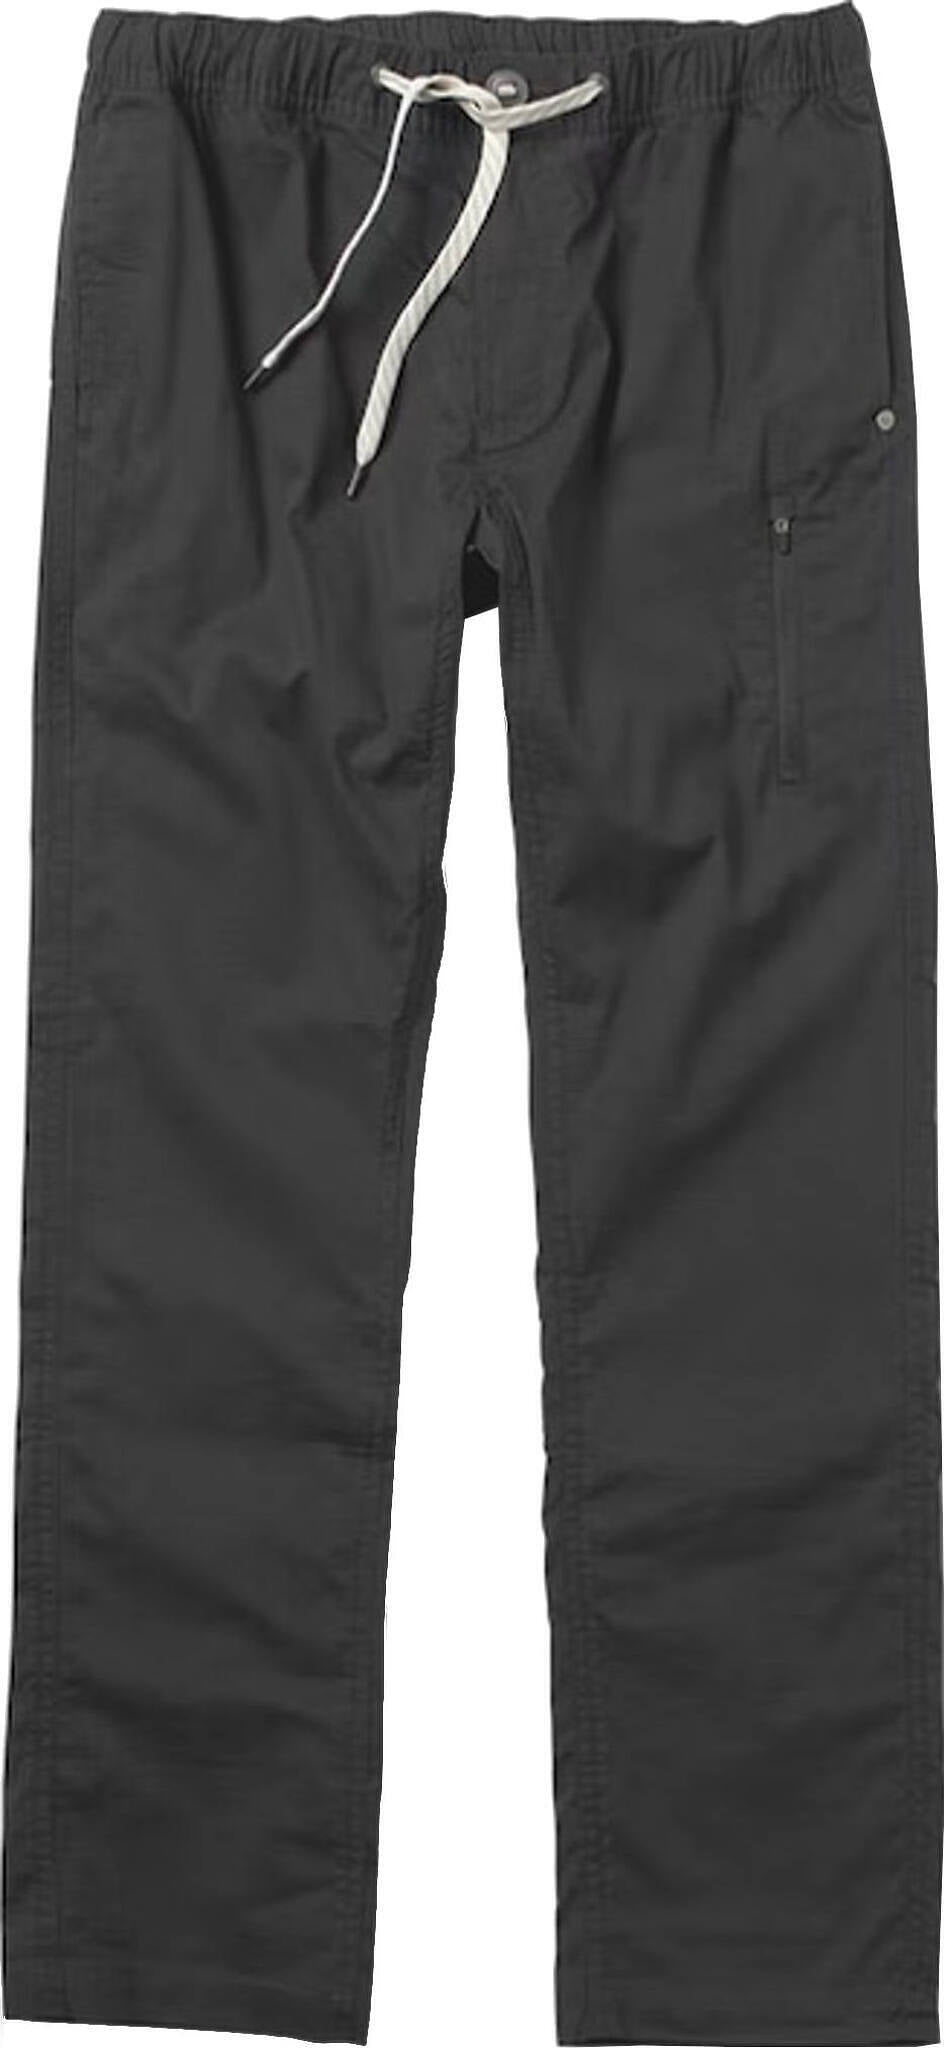 Vuori Ripstop Pants, Charcoal, Large